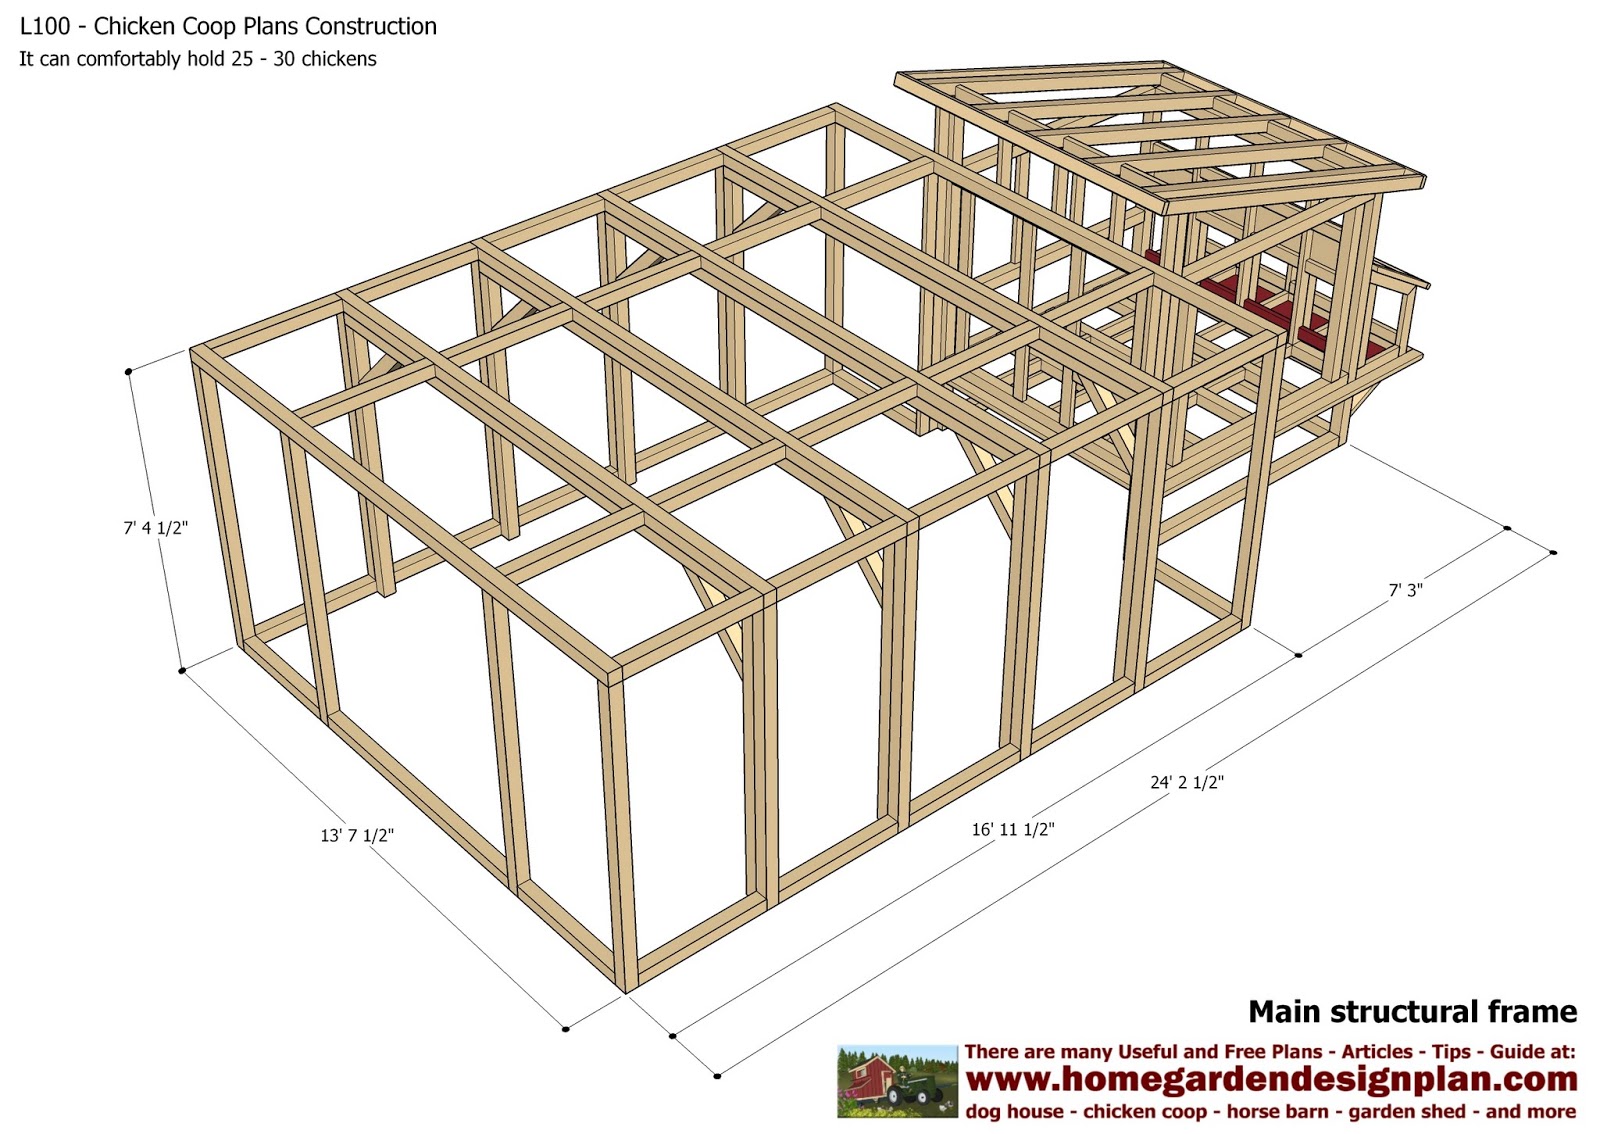 Chicken Coop Plans Construction - Chicken Coop Design - How To Build